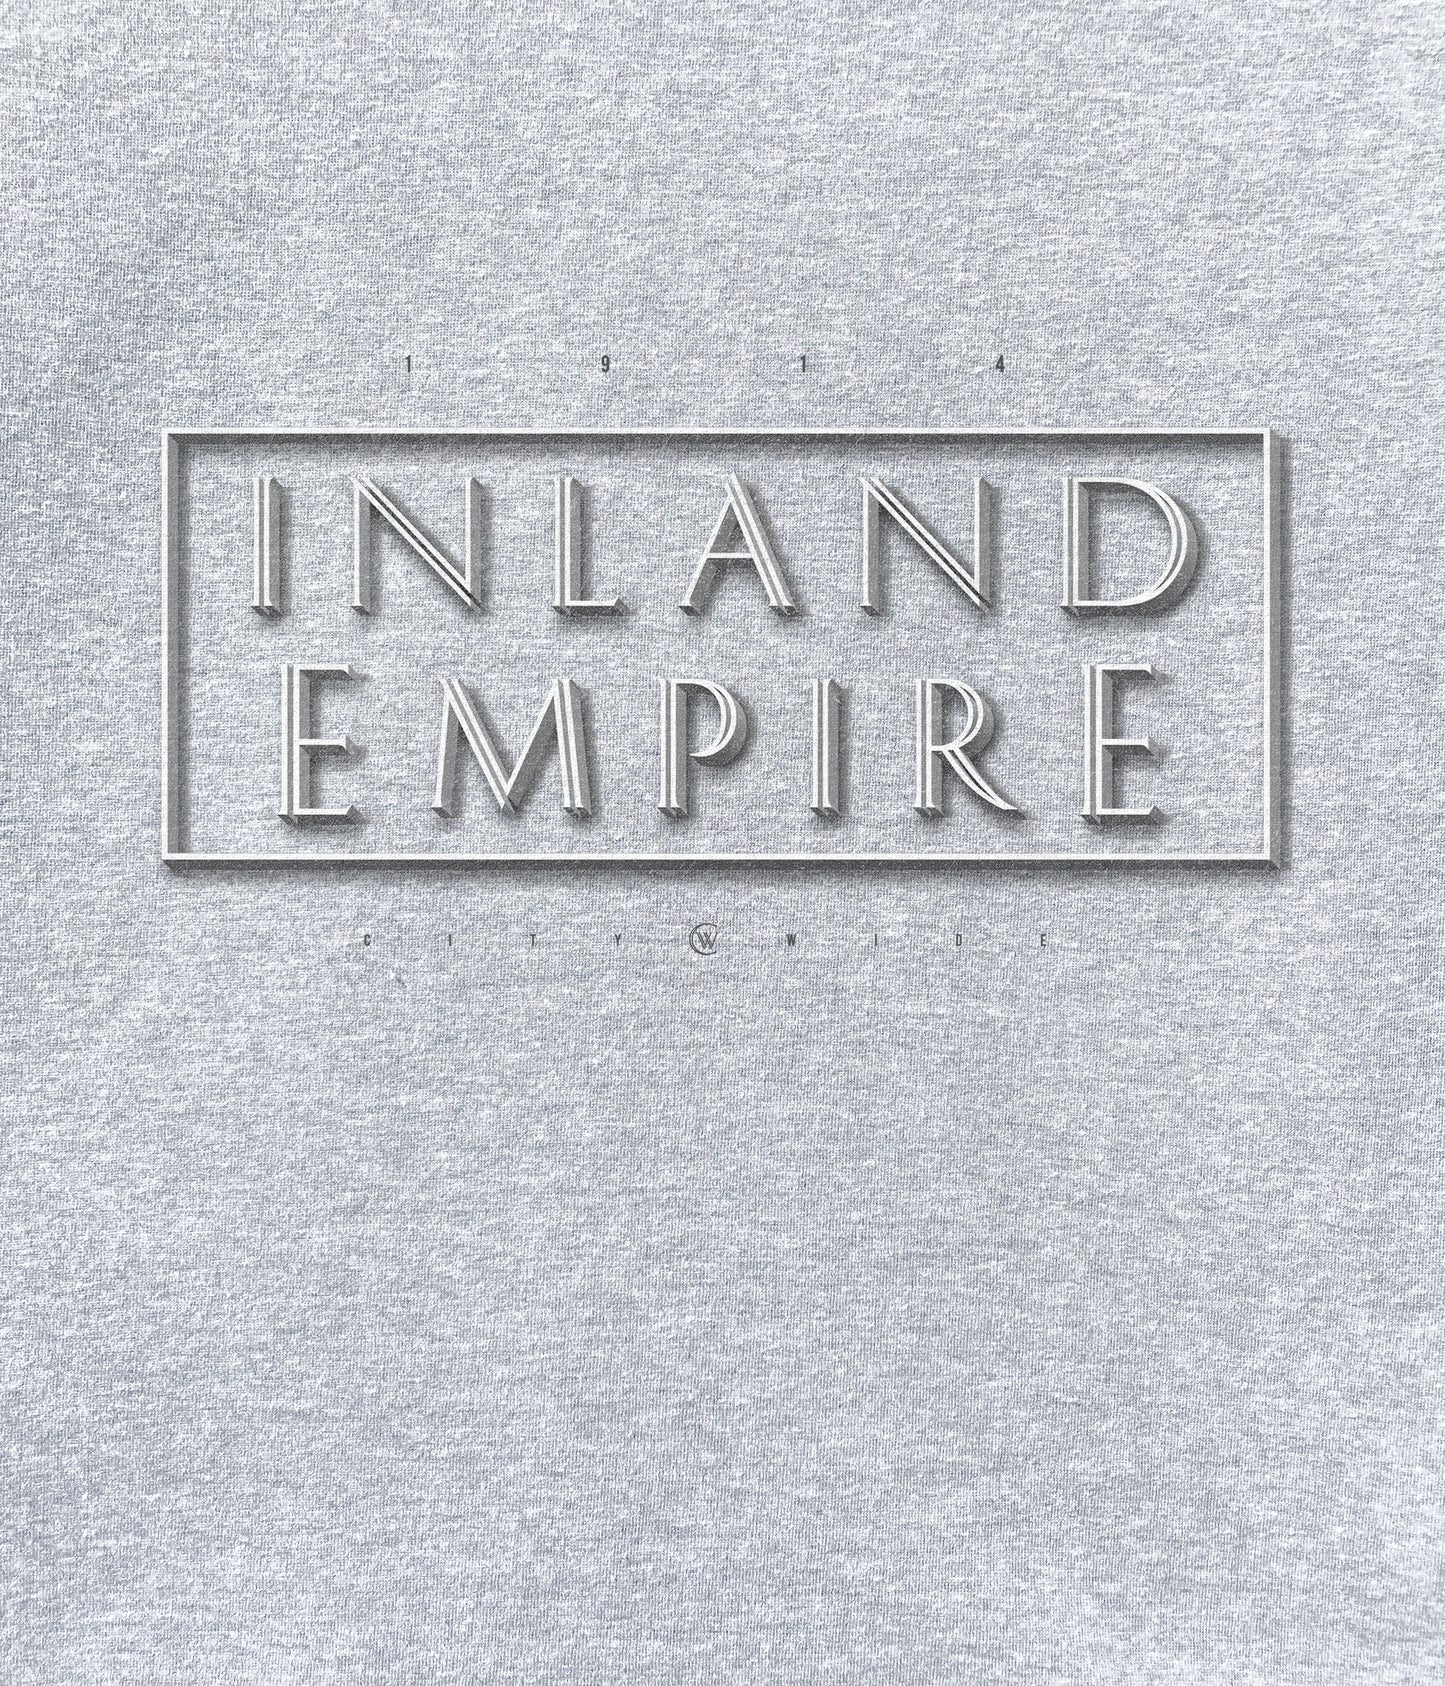 Inland Empire Chiseled Hoody